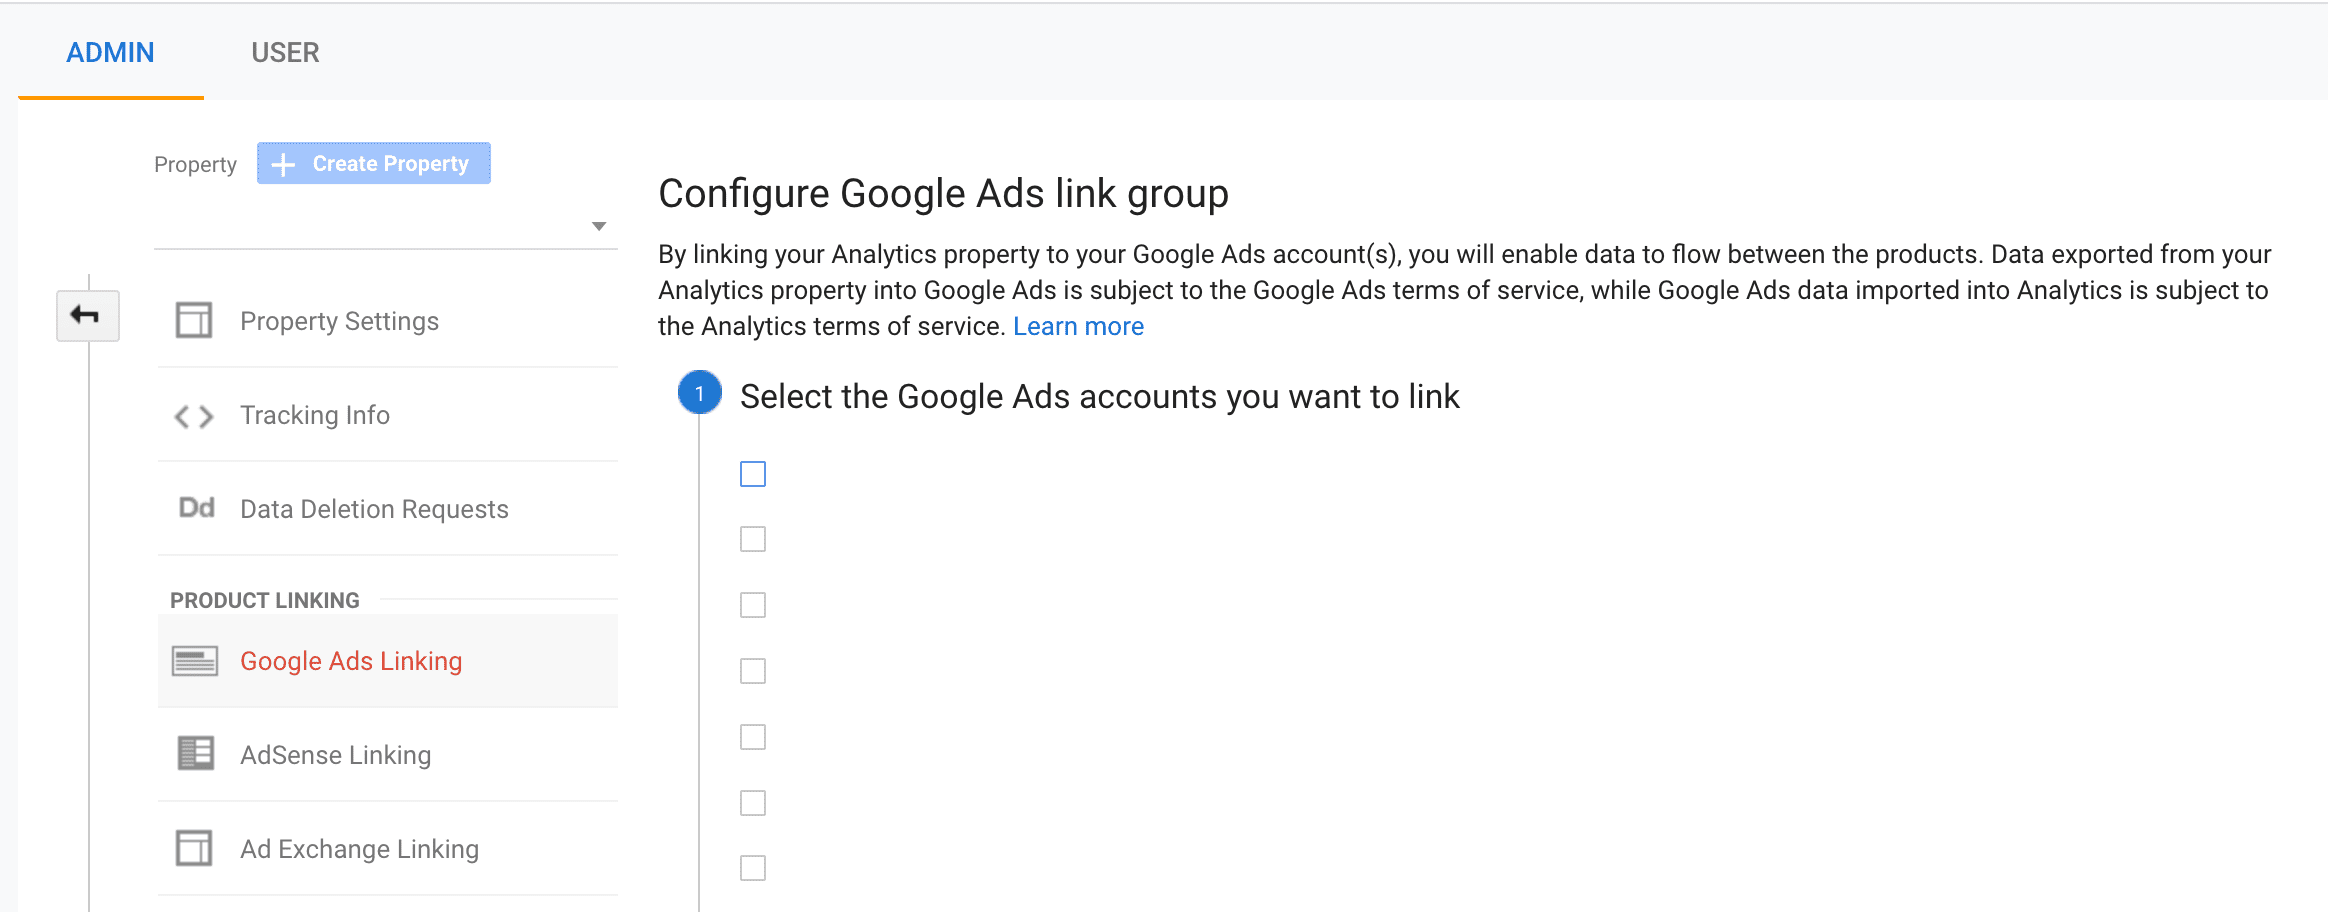 Google Ads Account Link in Google Analytics Setup